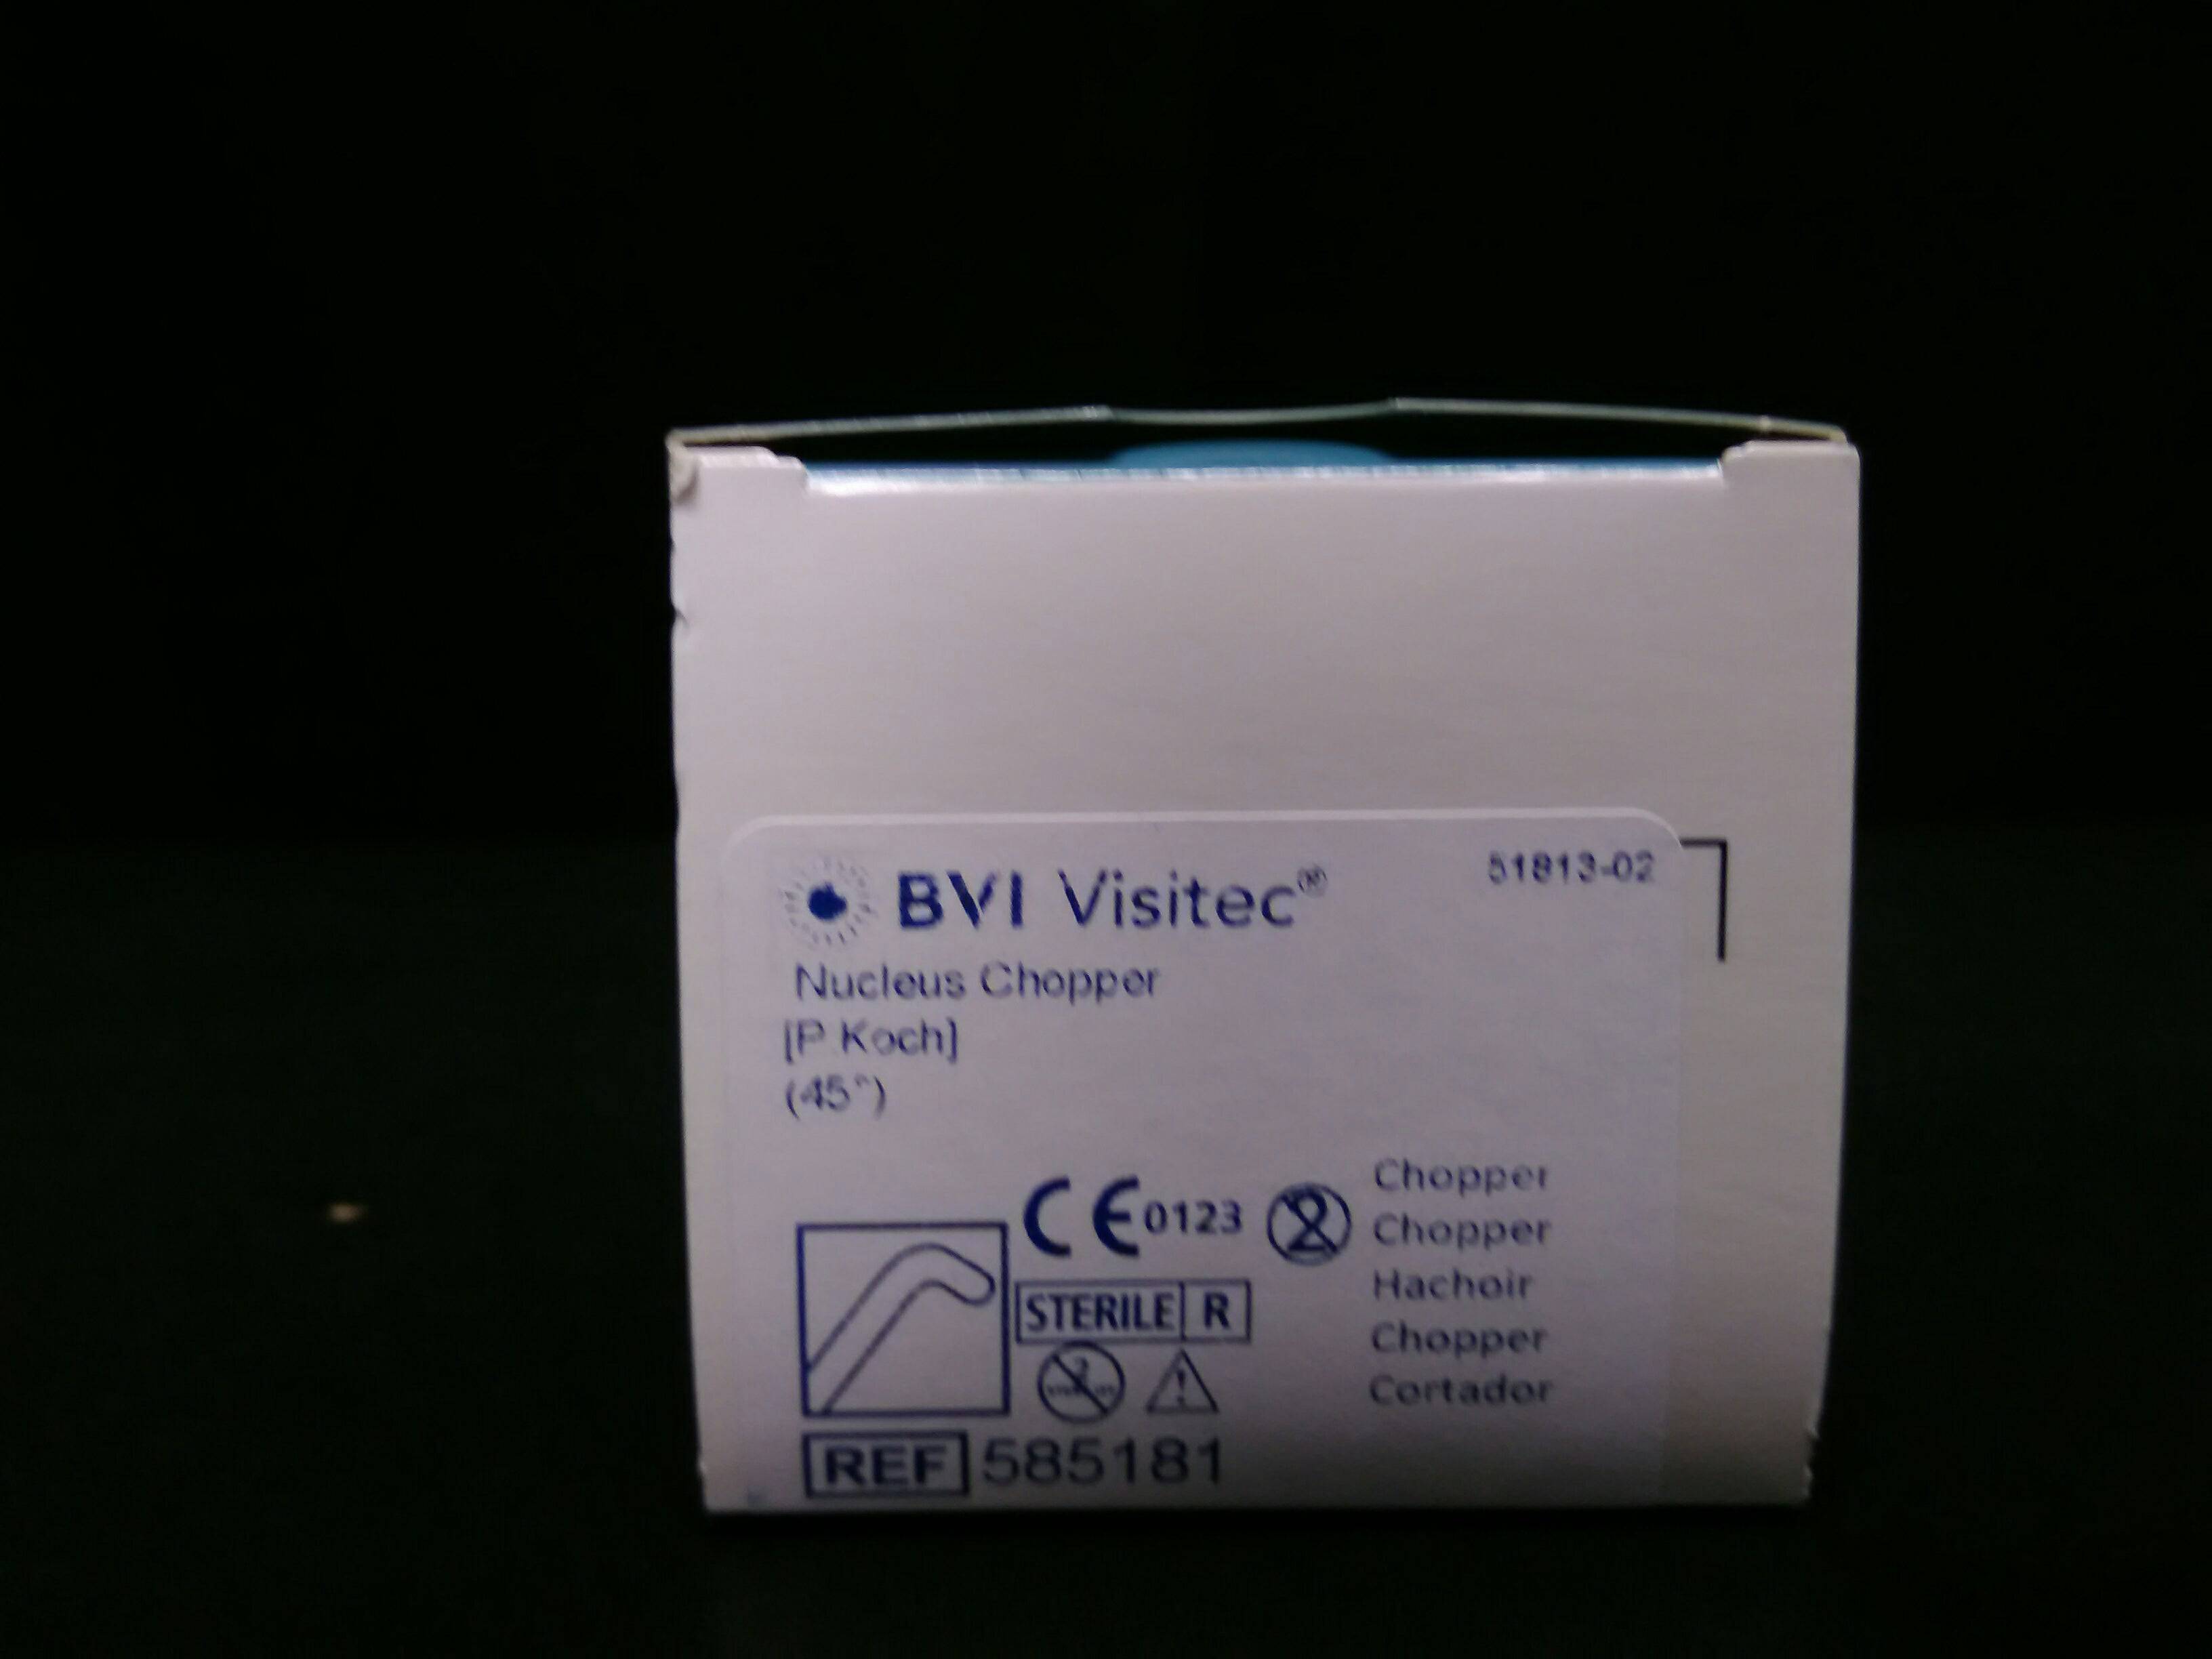 BEAVER-VISITEC 585181 NUCLEUS CHOPPER (P. Koch) (3/SP)